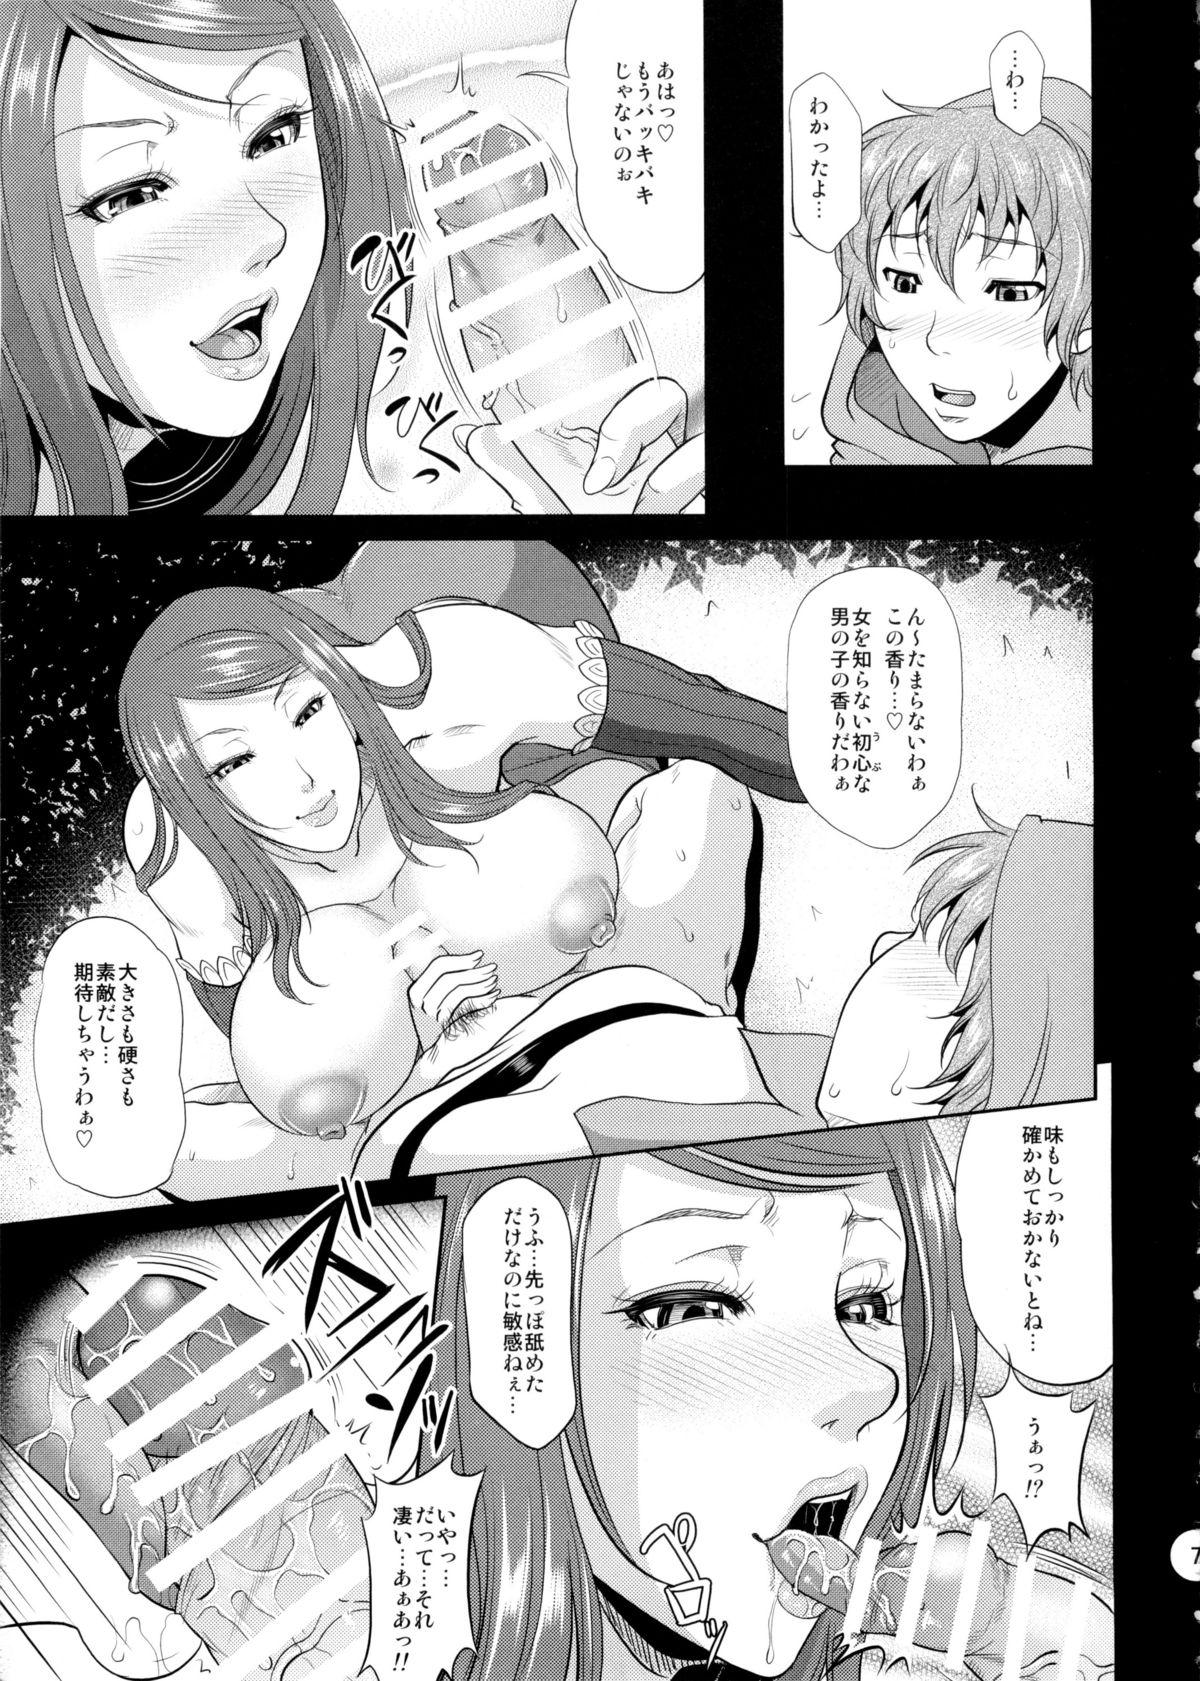 Mofos Sorceress ga Inran Sugite Kigaru ni Nojuku Dekinai... Hon - Dragons crown Clothed - Page 7